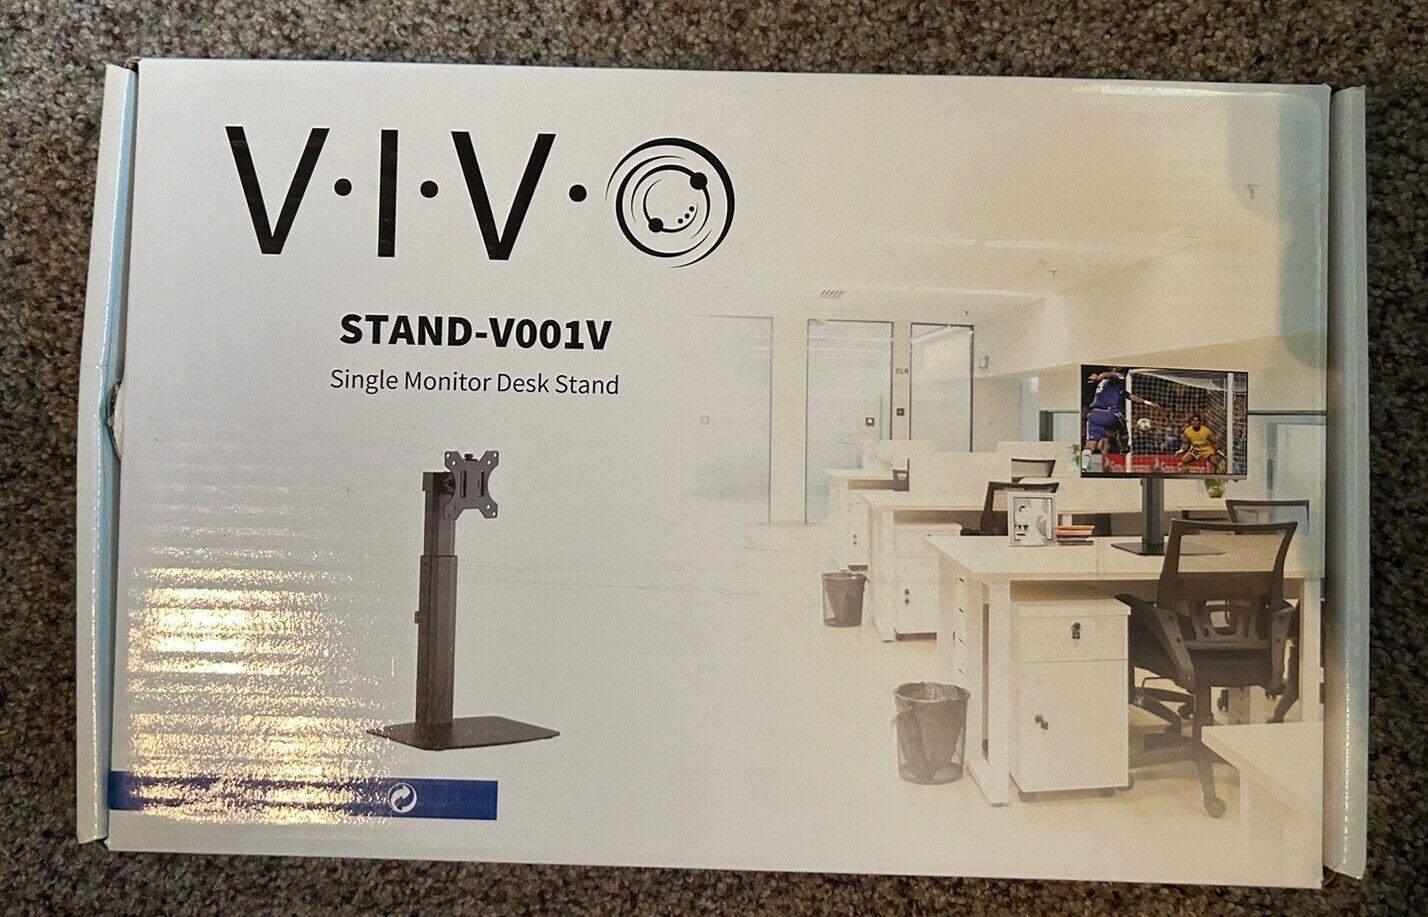 NEW VIVO STAND-V001V  17” To 32” Screen Size NIB $99 Single Monitor Desk Stand